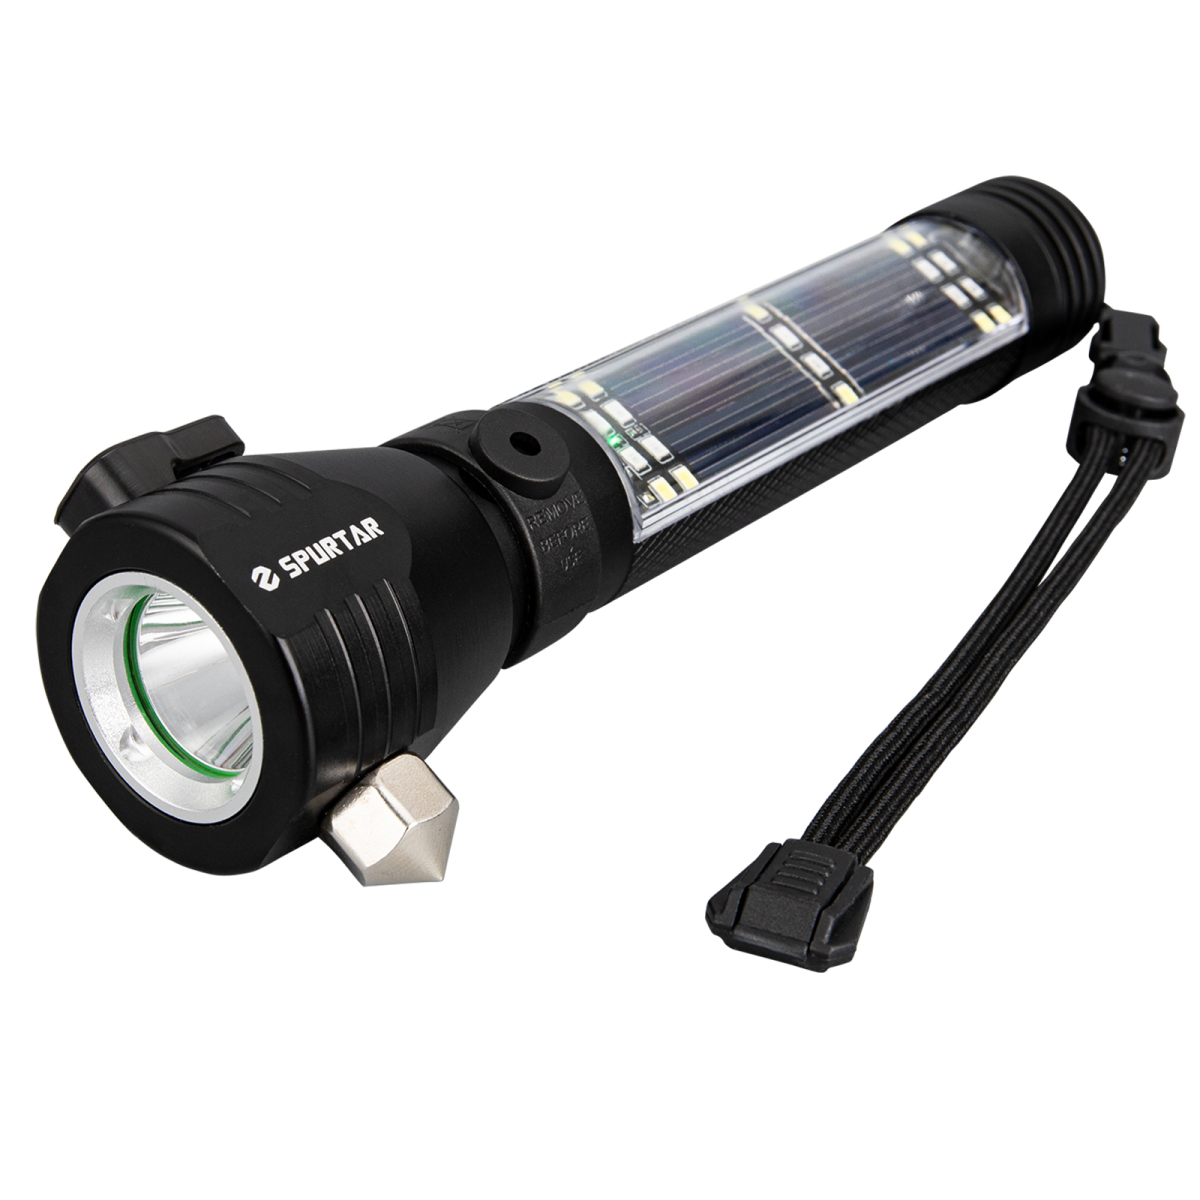 Spurtar 7-Modes Solar Flashlights